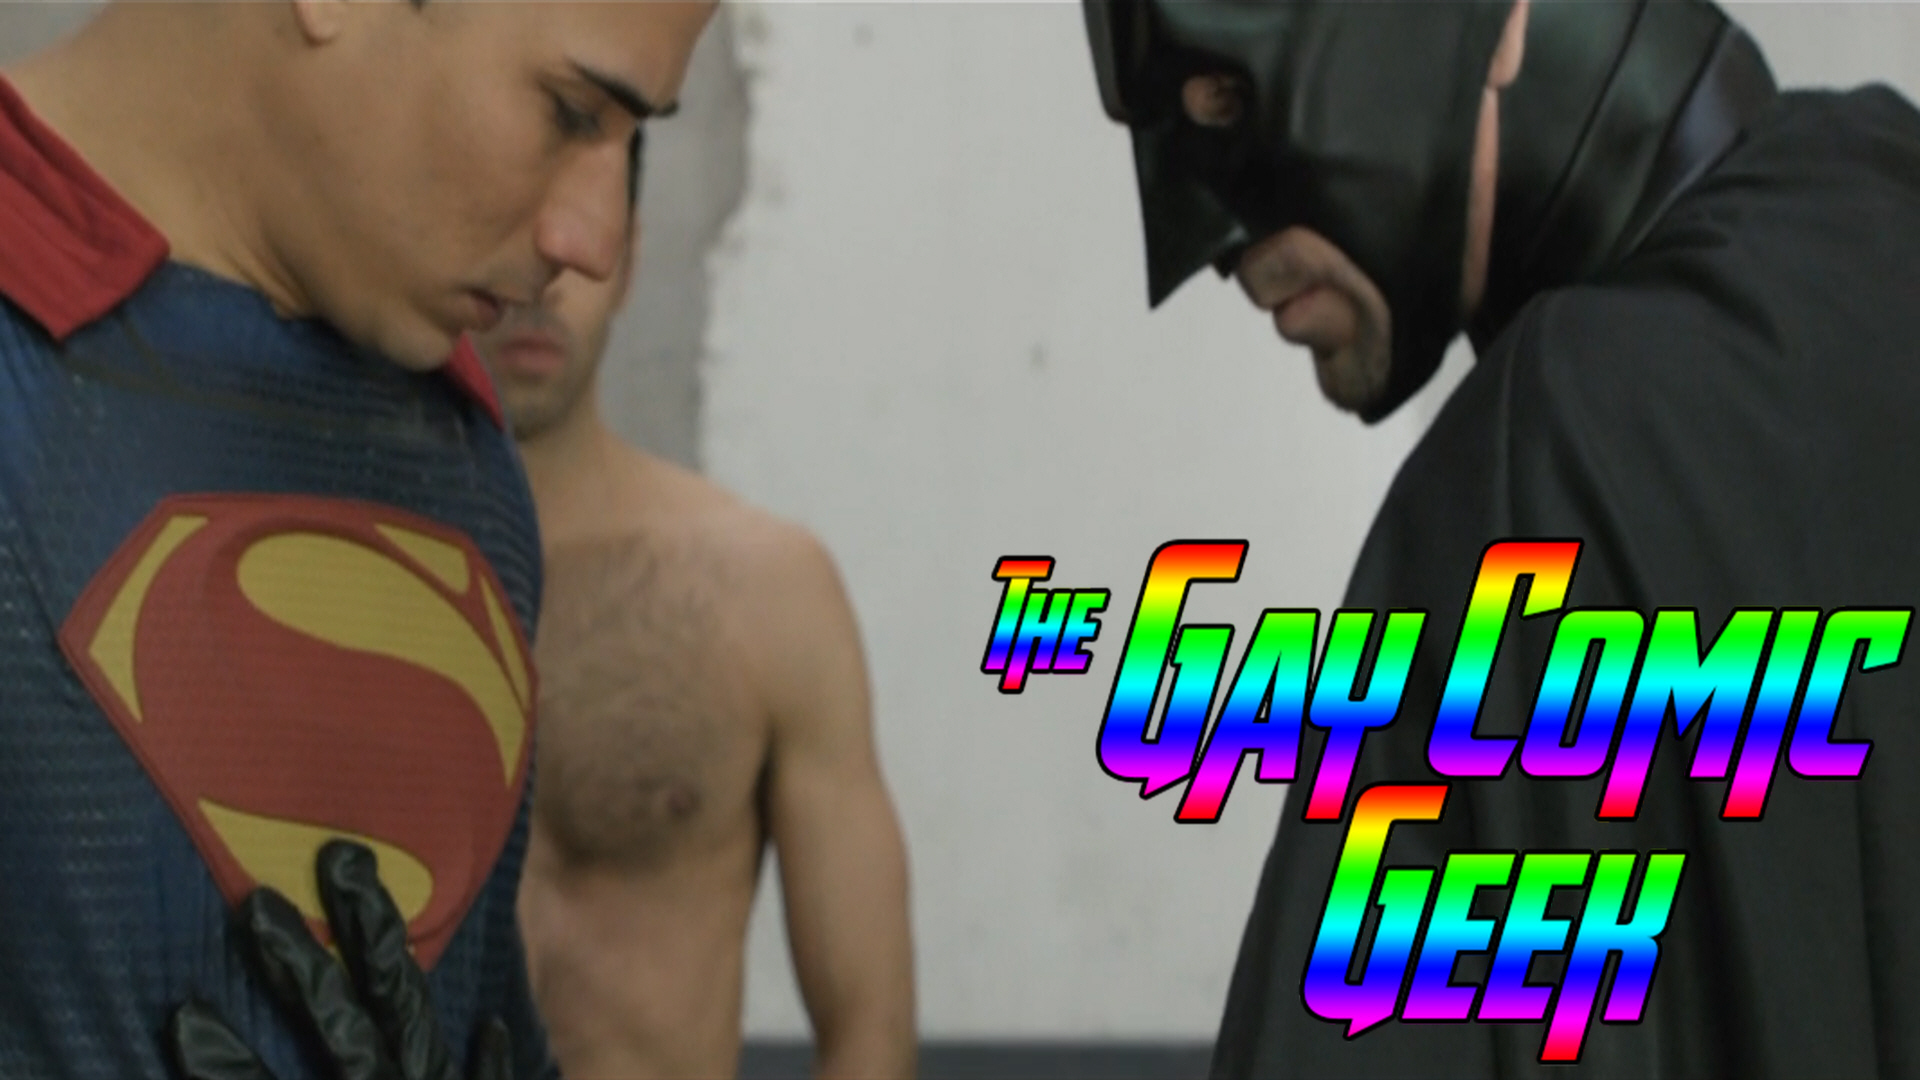 Batman Superman Part U A Gay Porn Parody Uncut Scene Review Gay Comic Geek